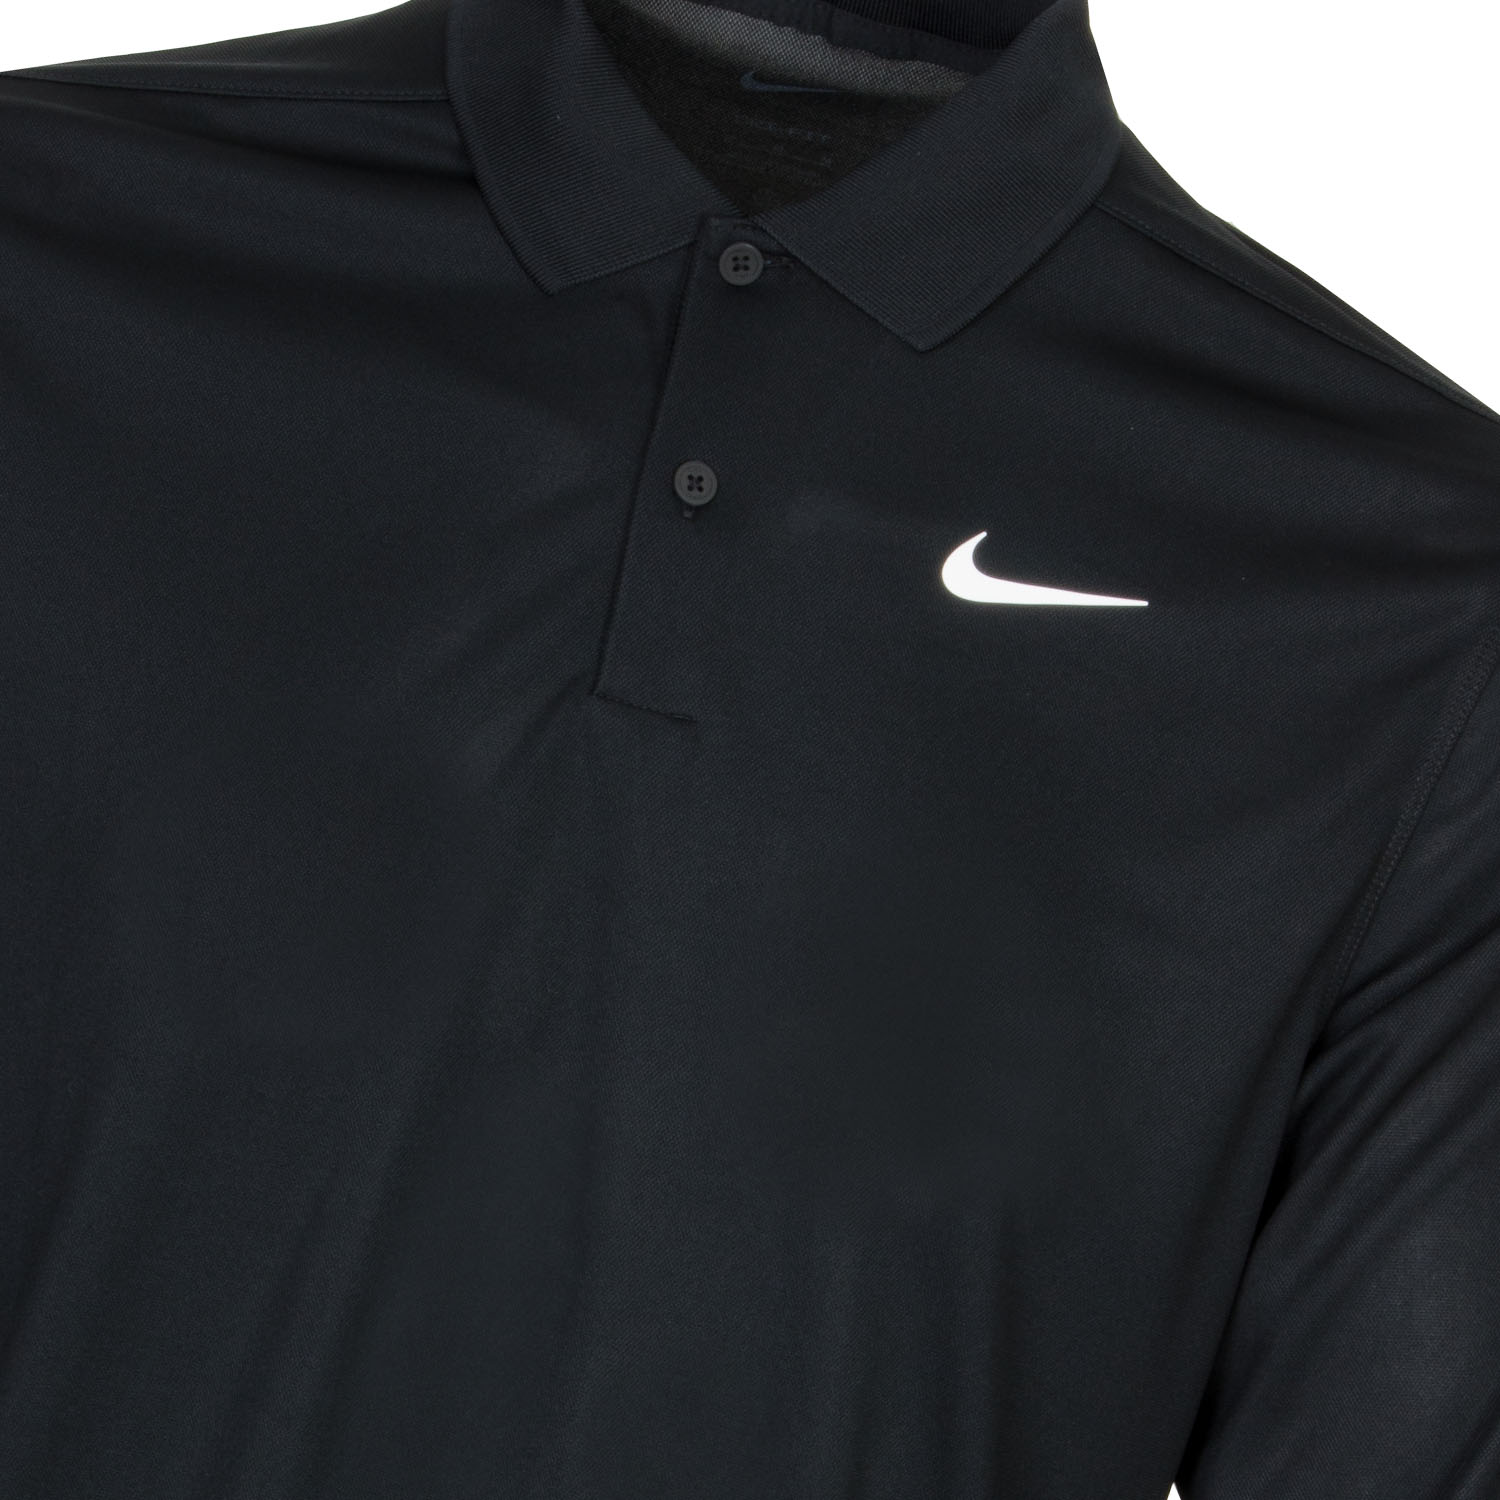 Nike Dri-FIT Victory Long-Sleeve Golf Polo Shirt Black/White ...